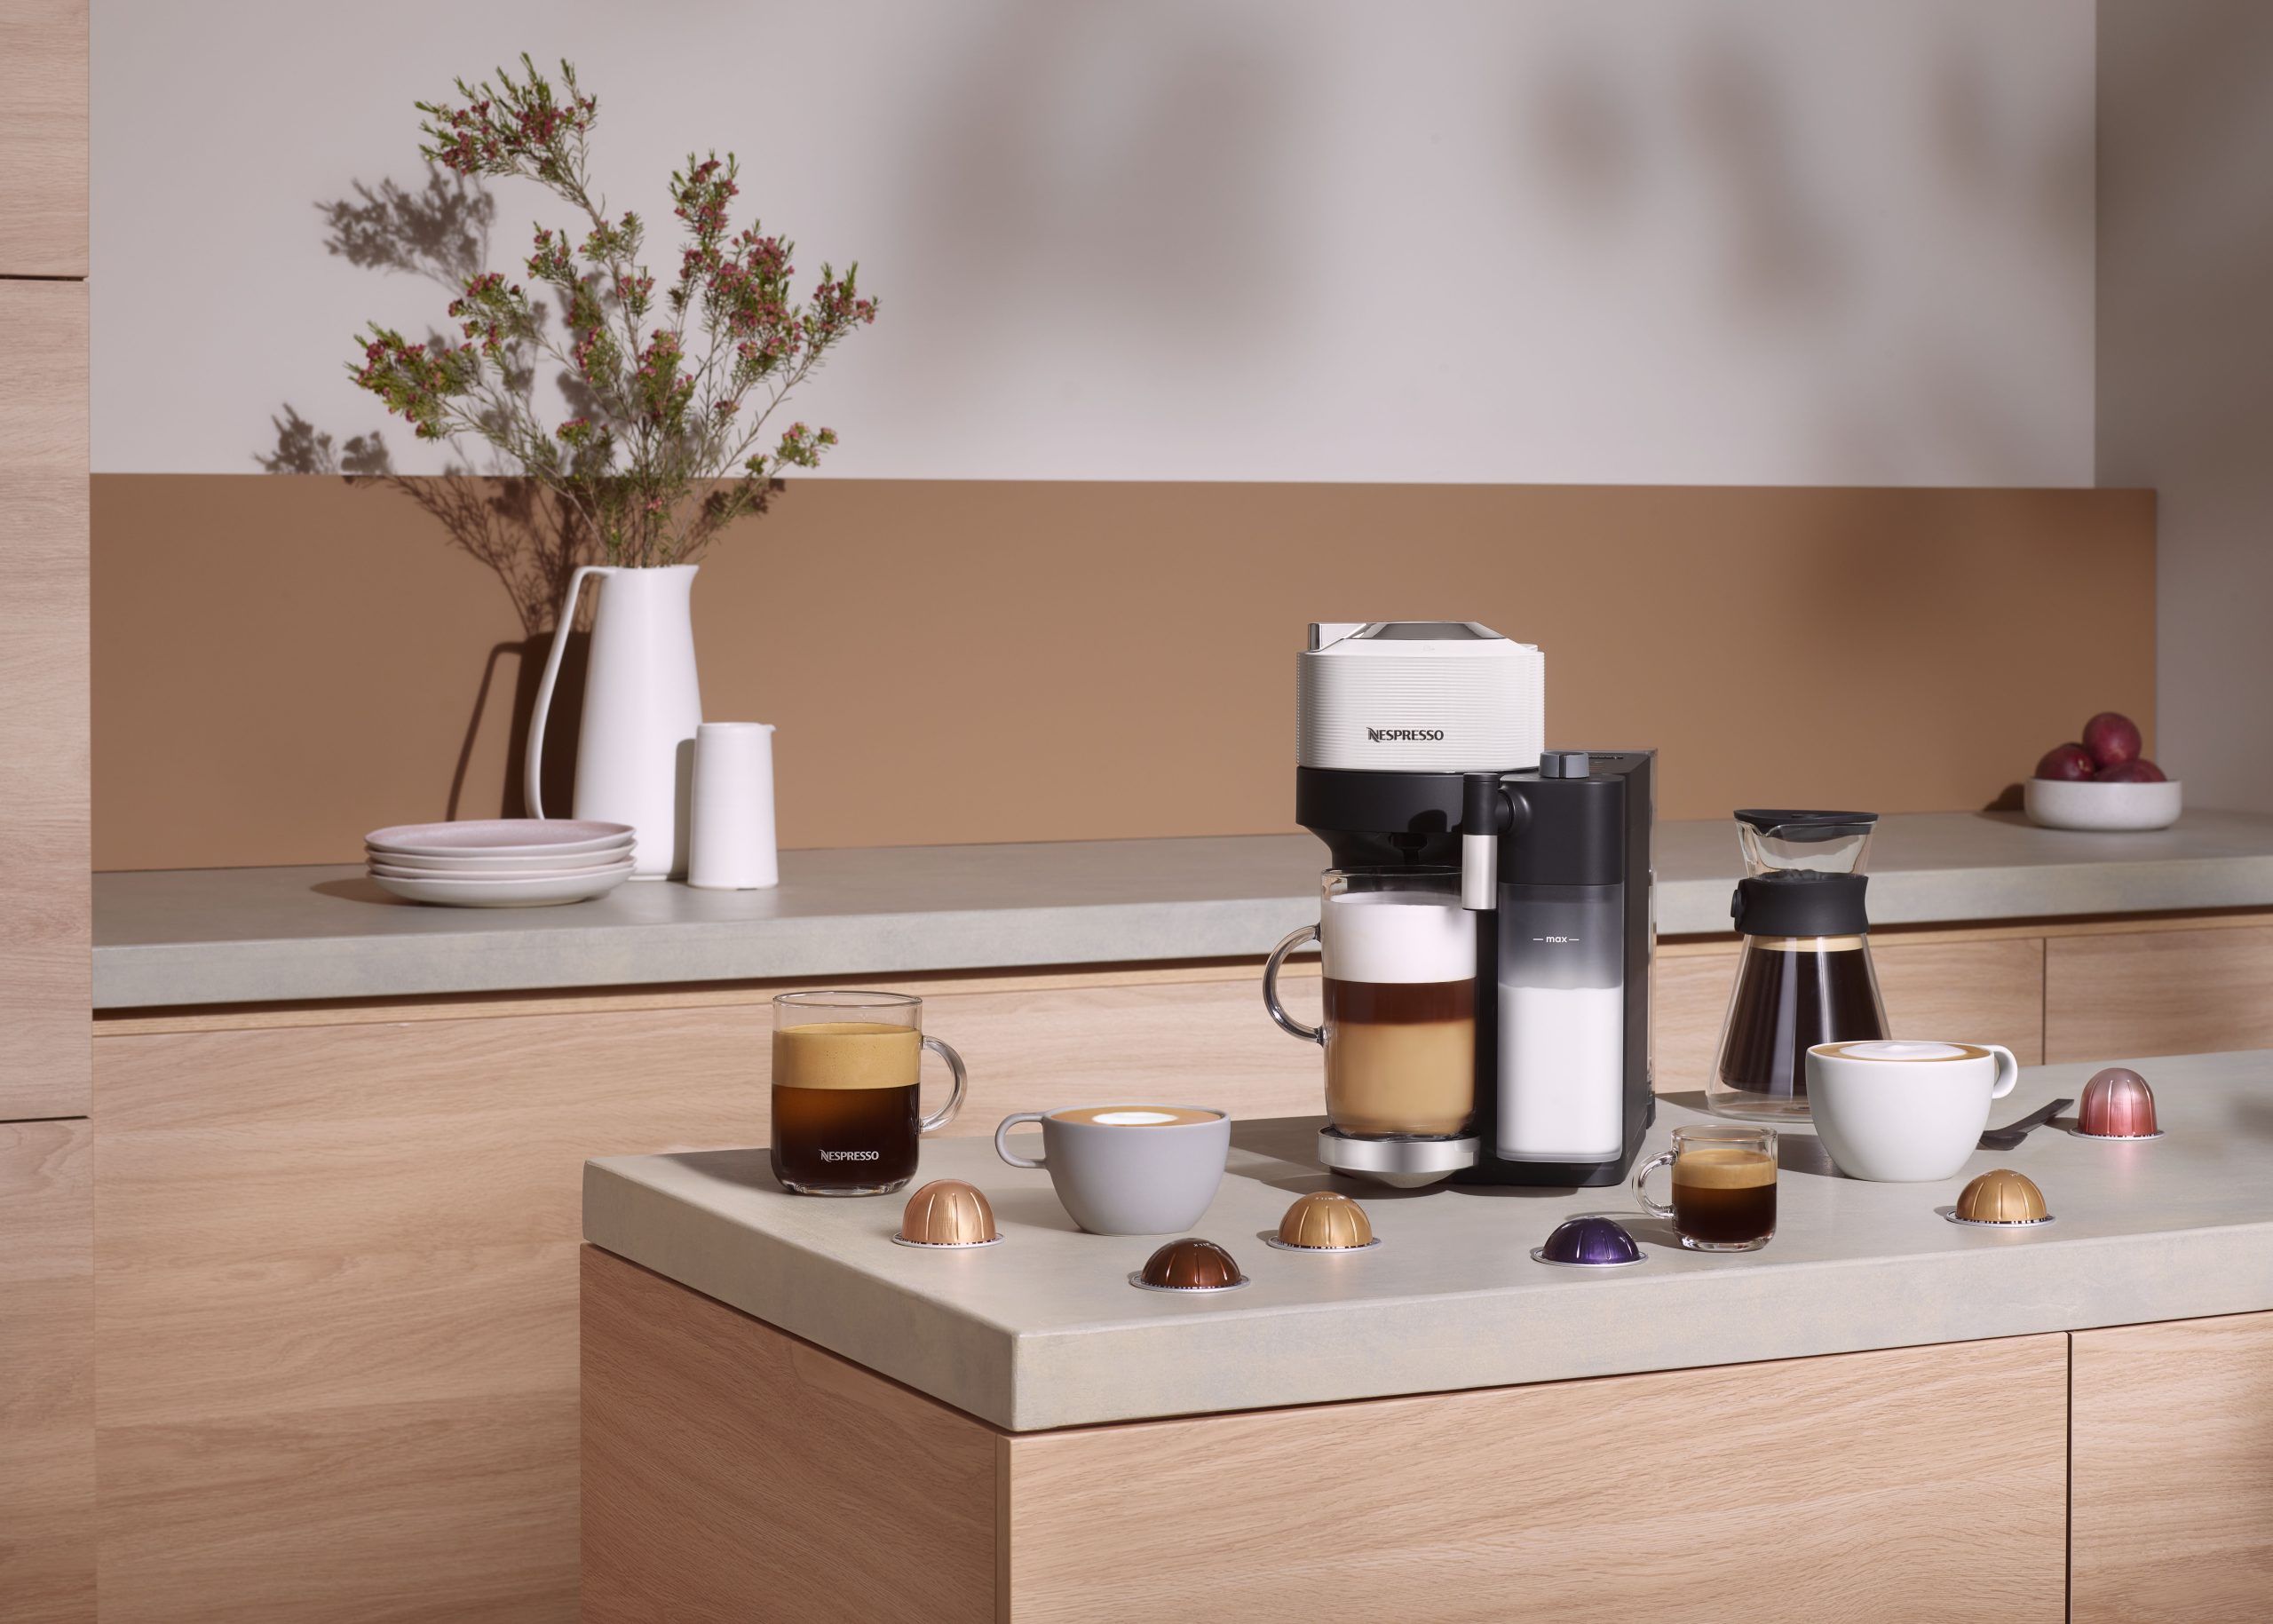 Upgrade your coffee station with the Nespresso Vertuo Lattissima